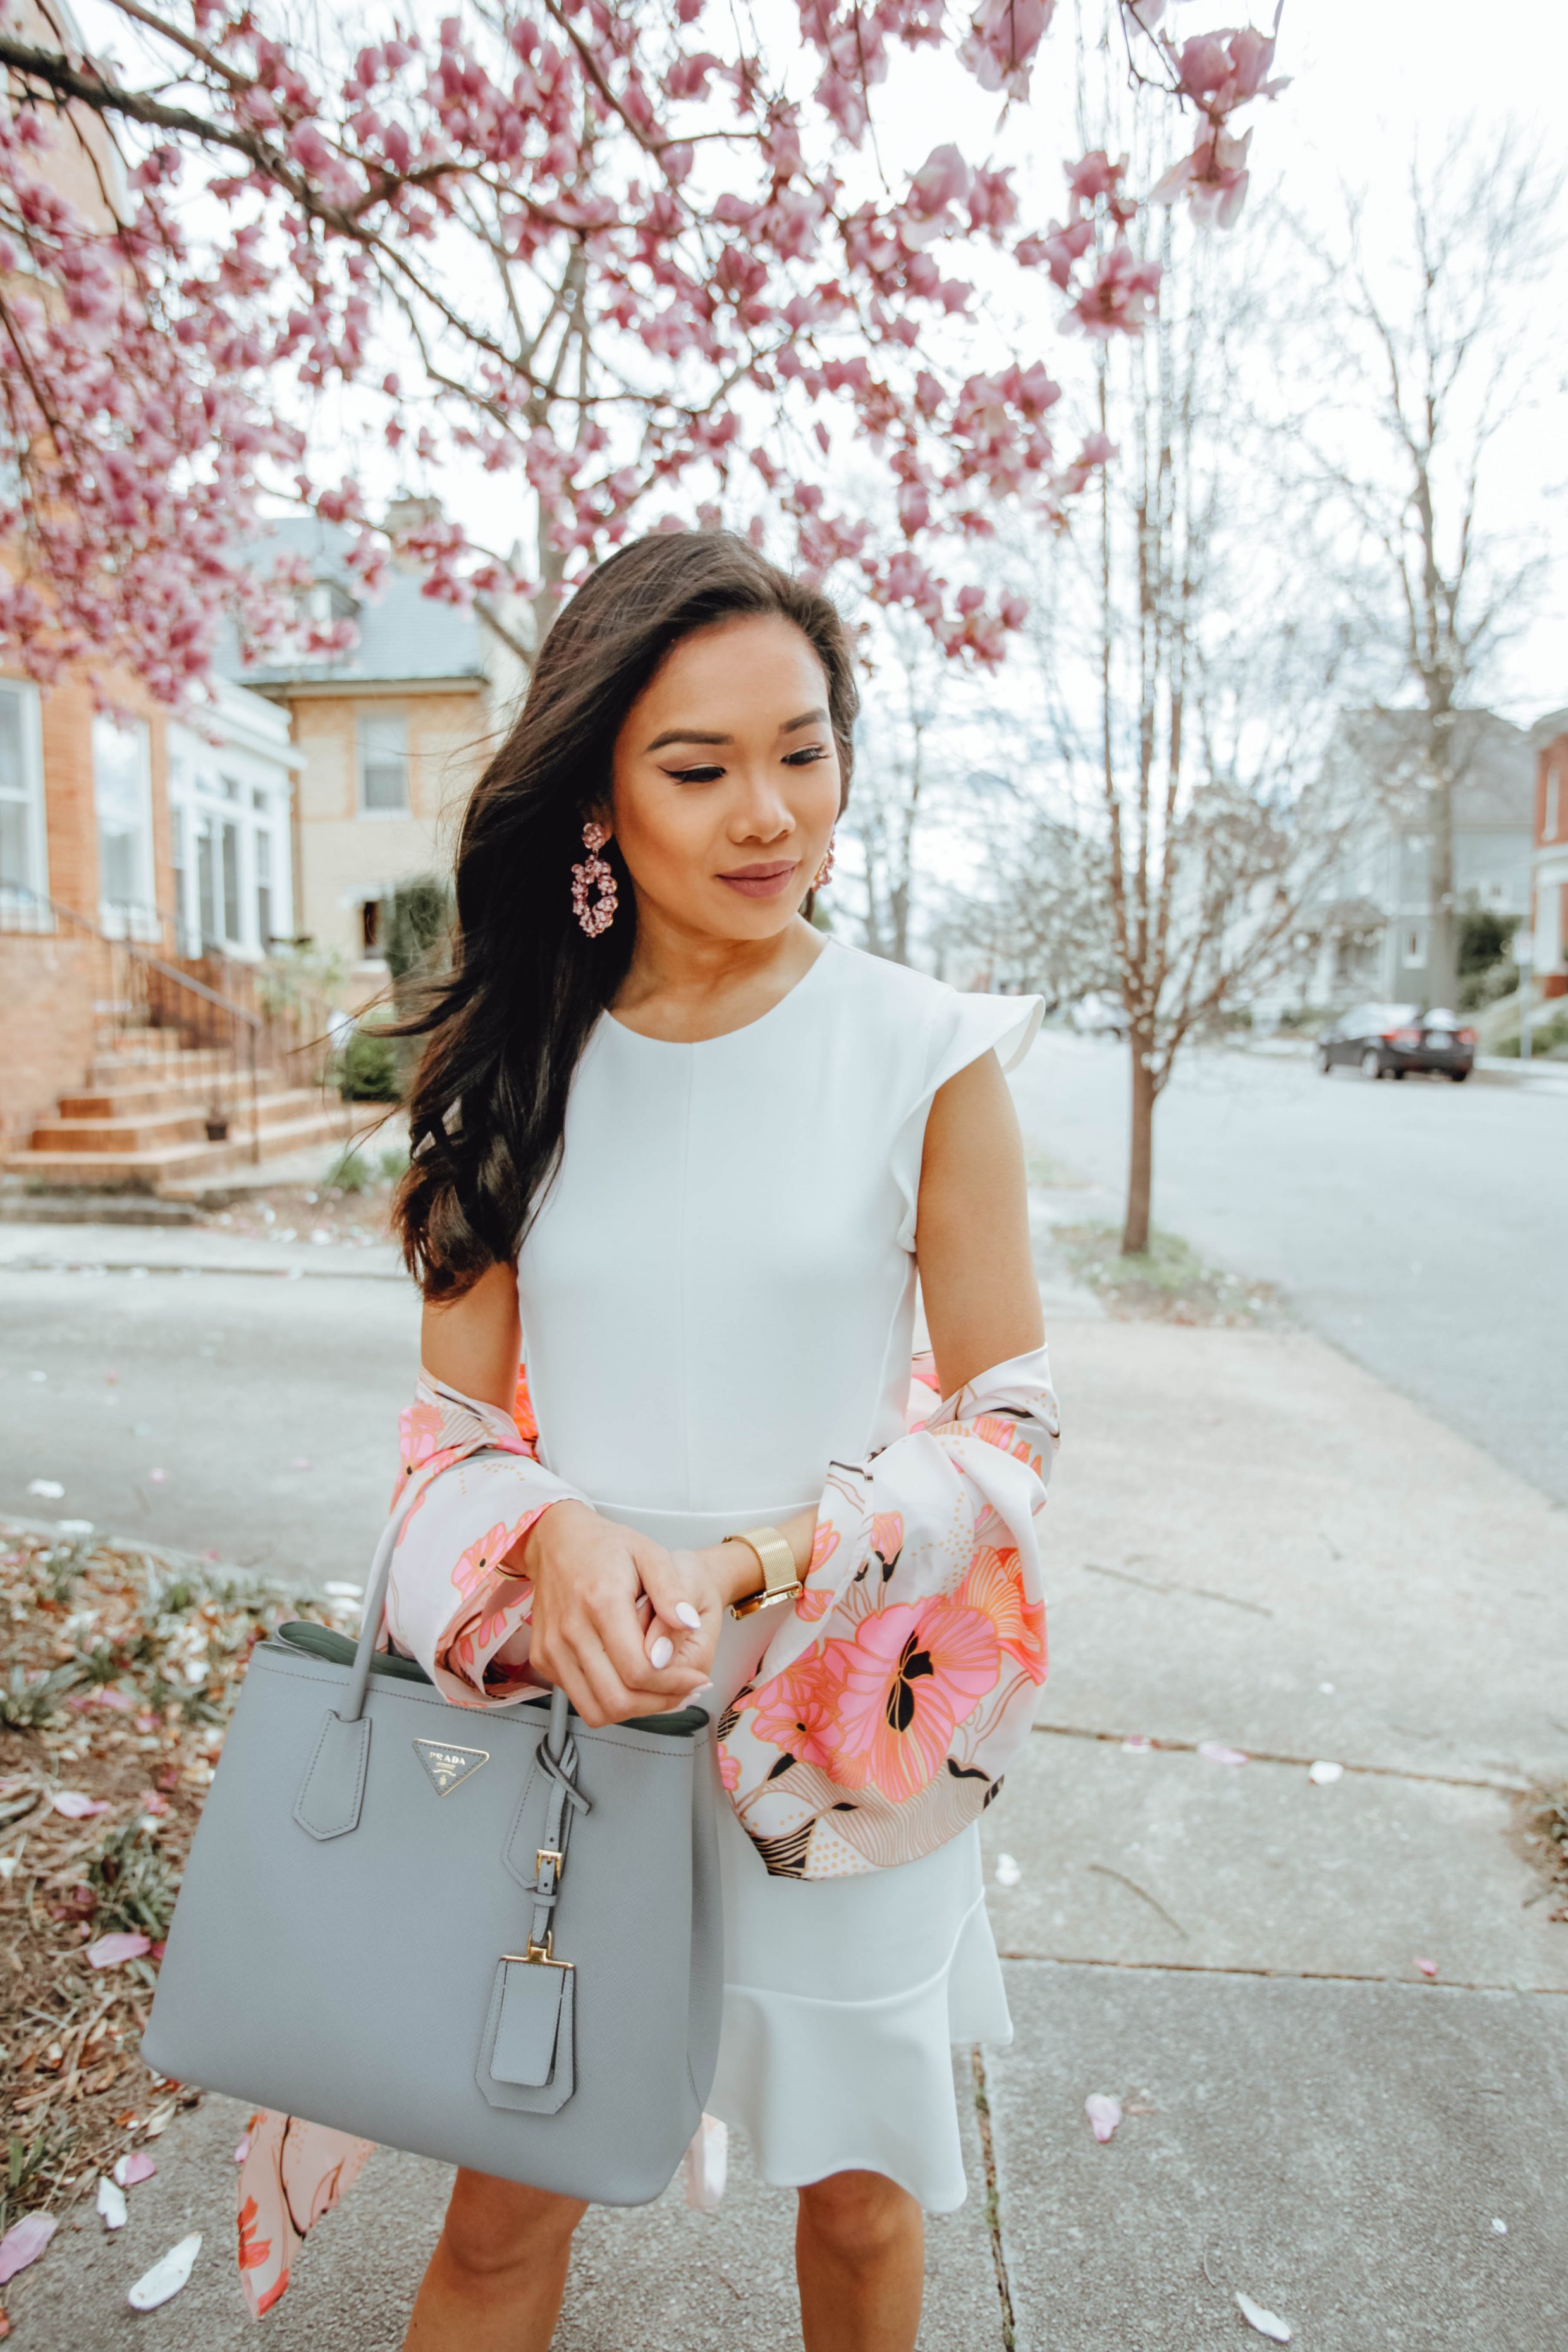 Blogger Hoang-Kim wears a white ruffle sleeve dress and floral kimono